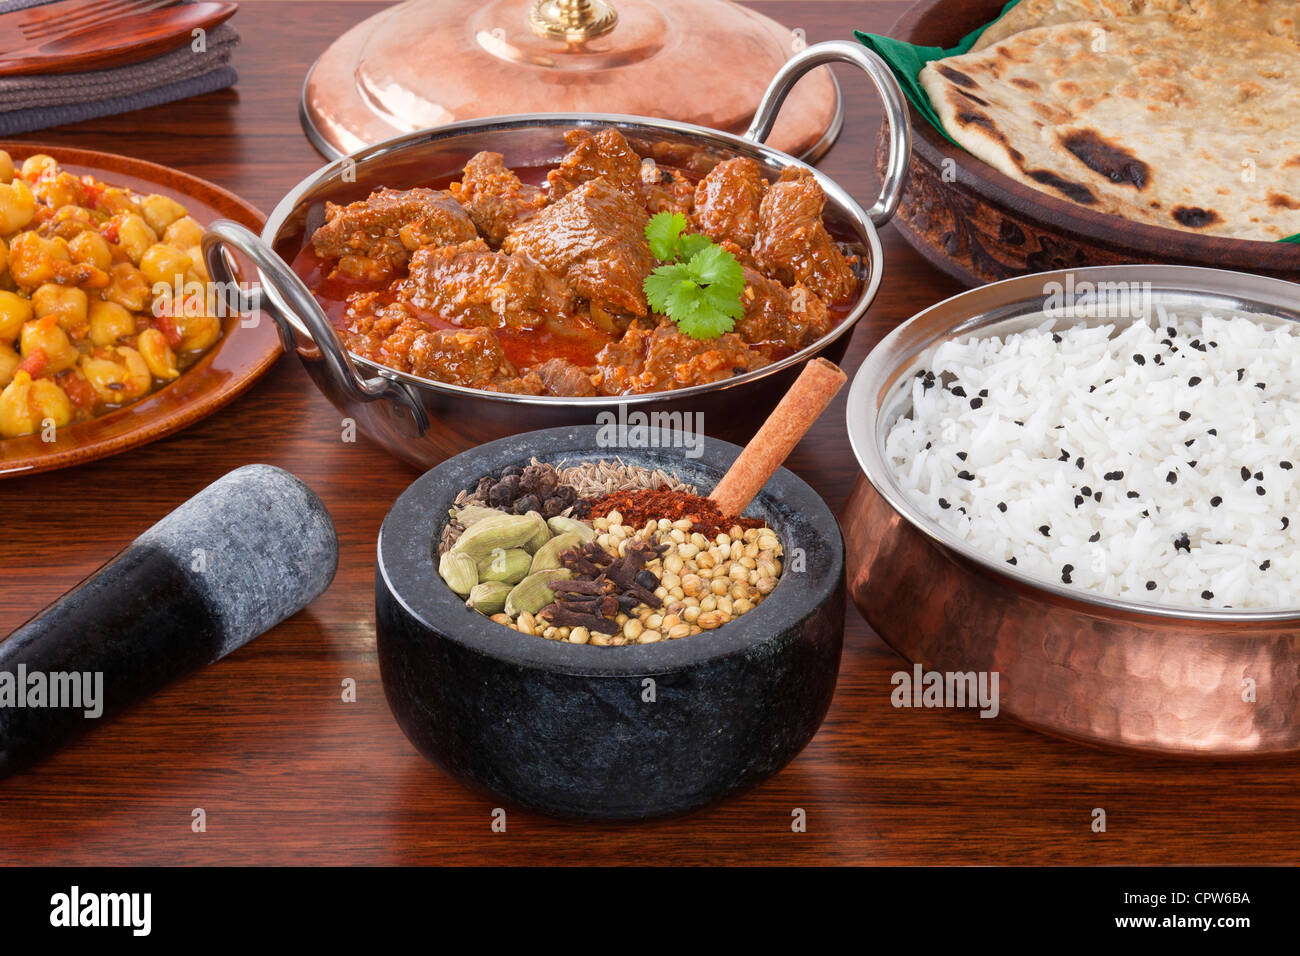 A selection of Indian food and spices, lamb rogan josh, chana masala, spices, basmati rice and parathas Stock Photo